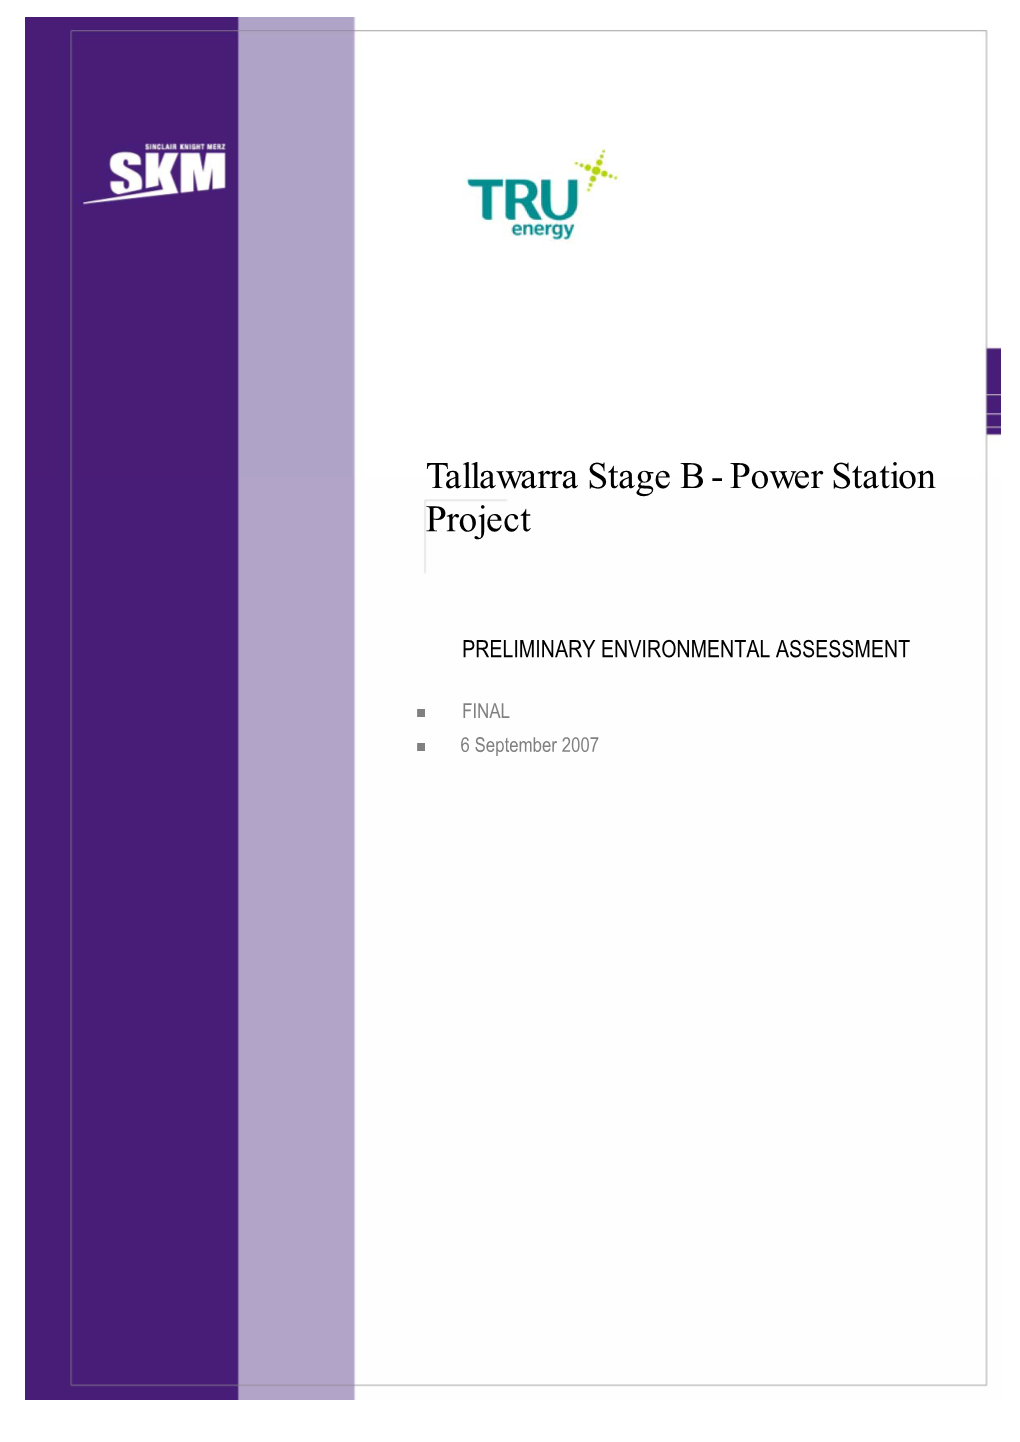 Tallawarra Stage B - Power Station Project